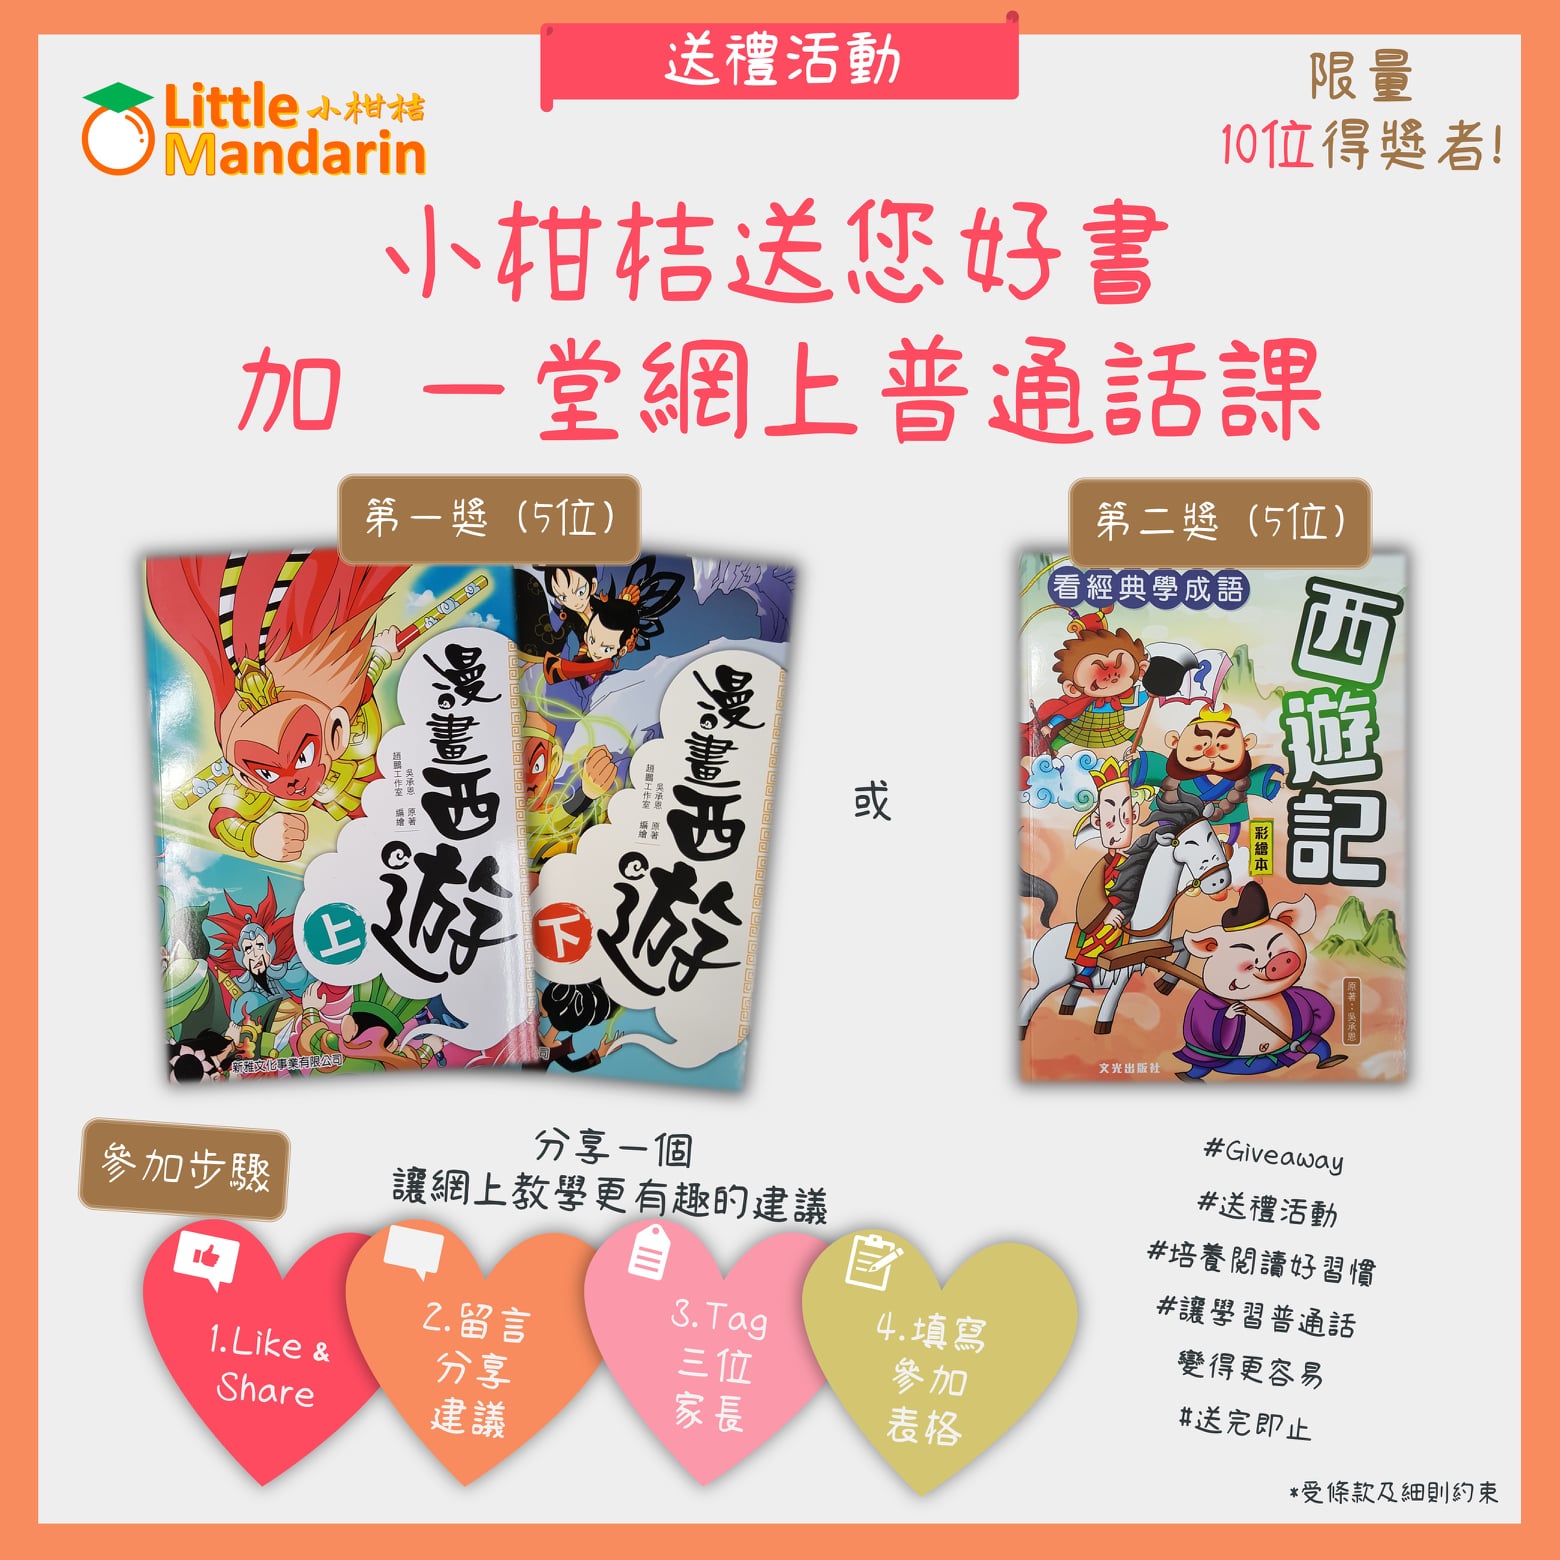 Littlemandarin.hk 有獎遊戲送 經典名著西遊記 兒童讀物